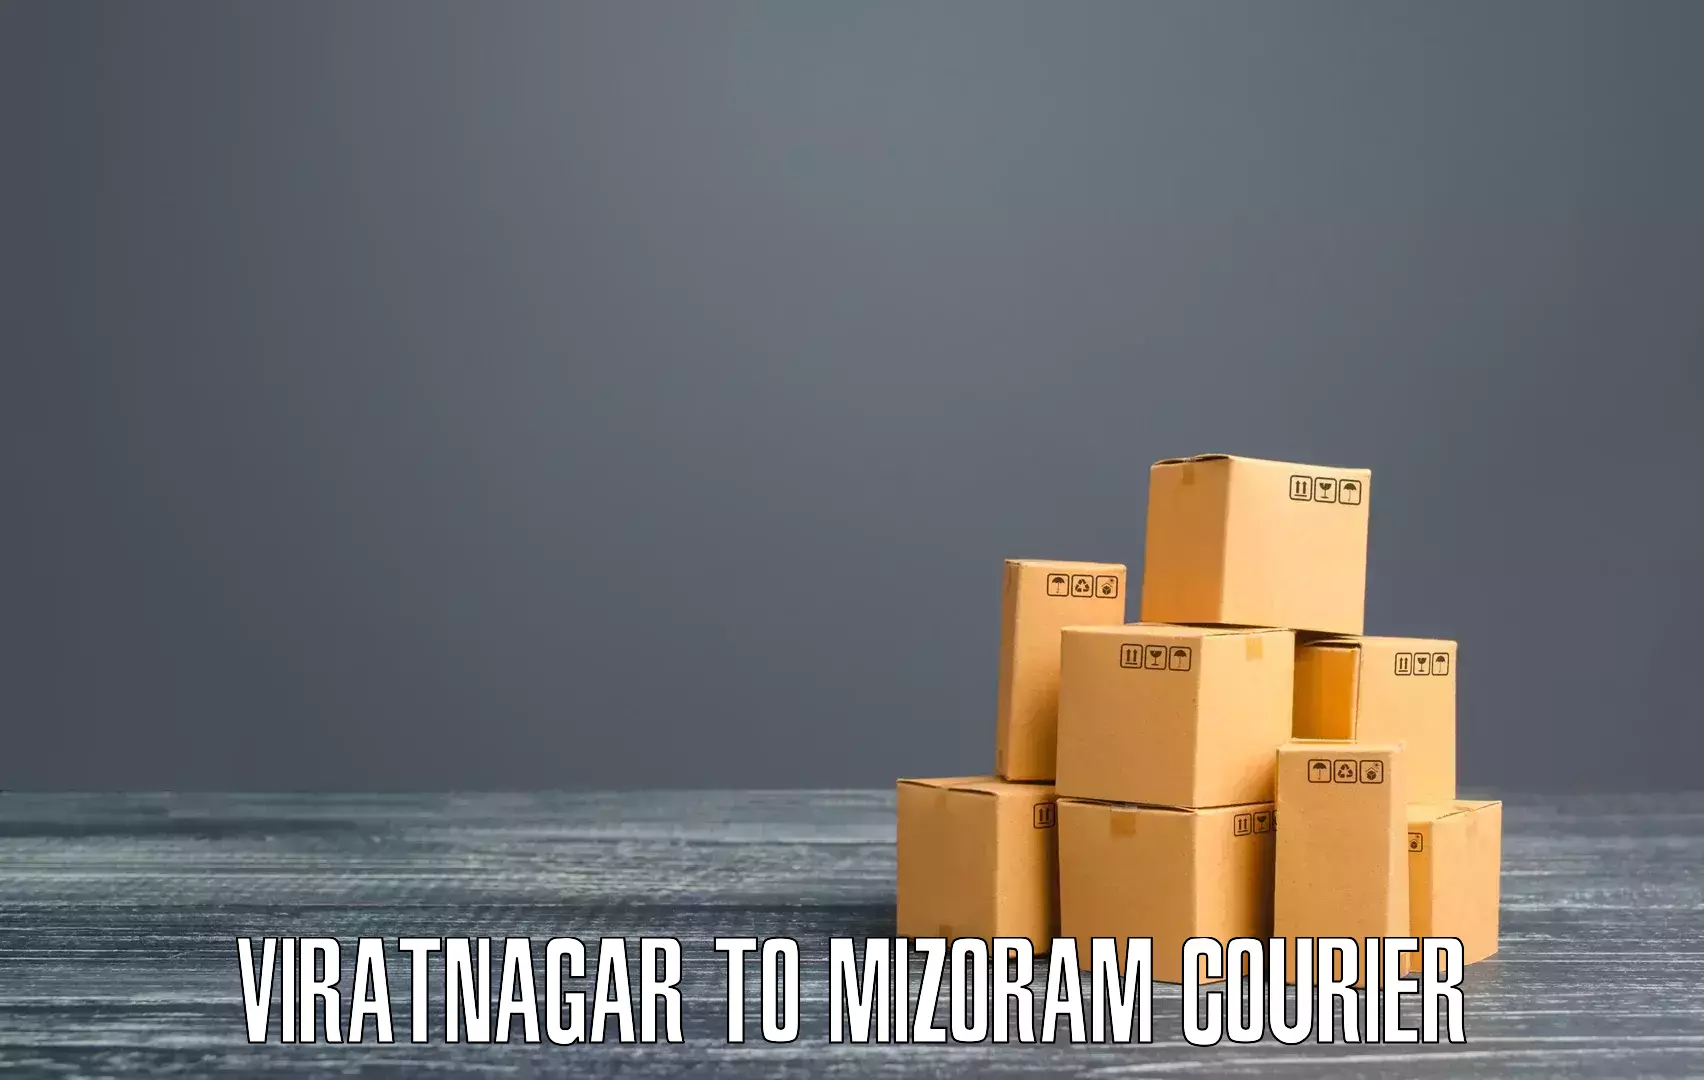 Express postal services Viratnagar to Darlawn